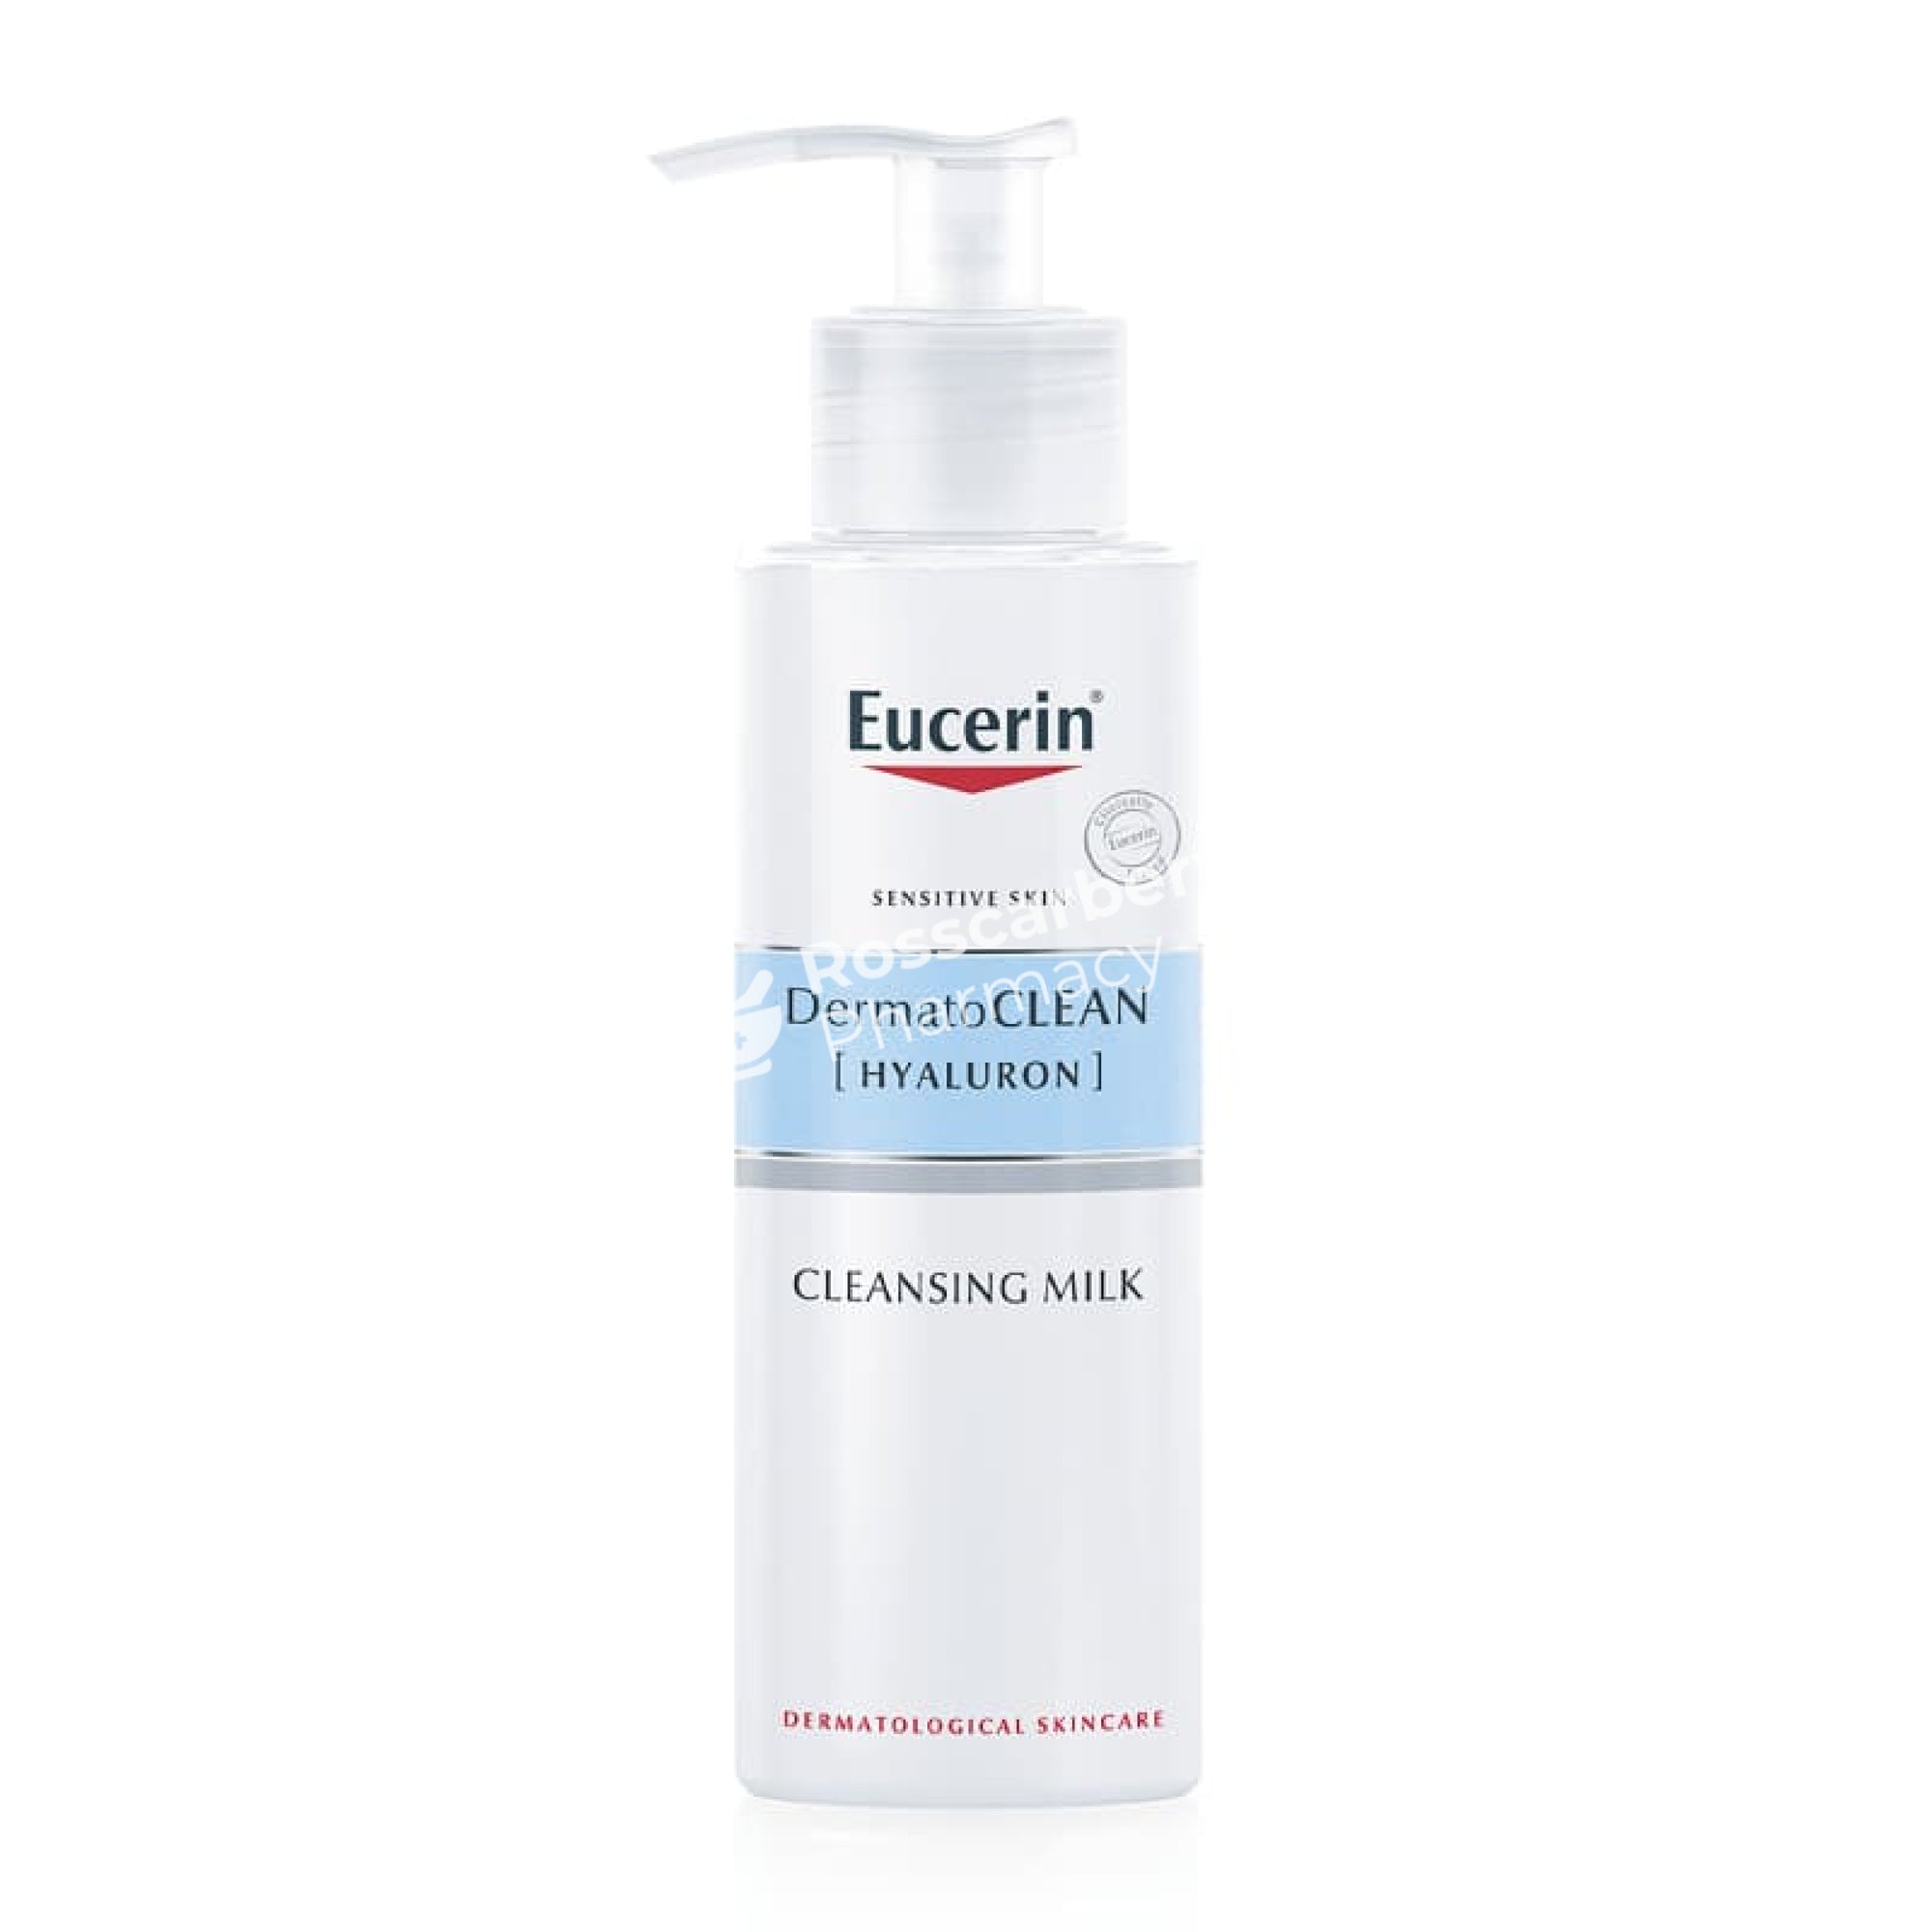 Eucerin Sensitive Skin Dermatoclean (Hyaluron) Cleansing Milk Cleanser